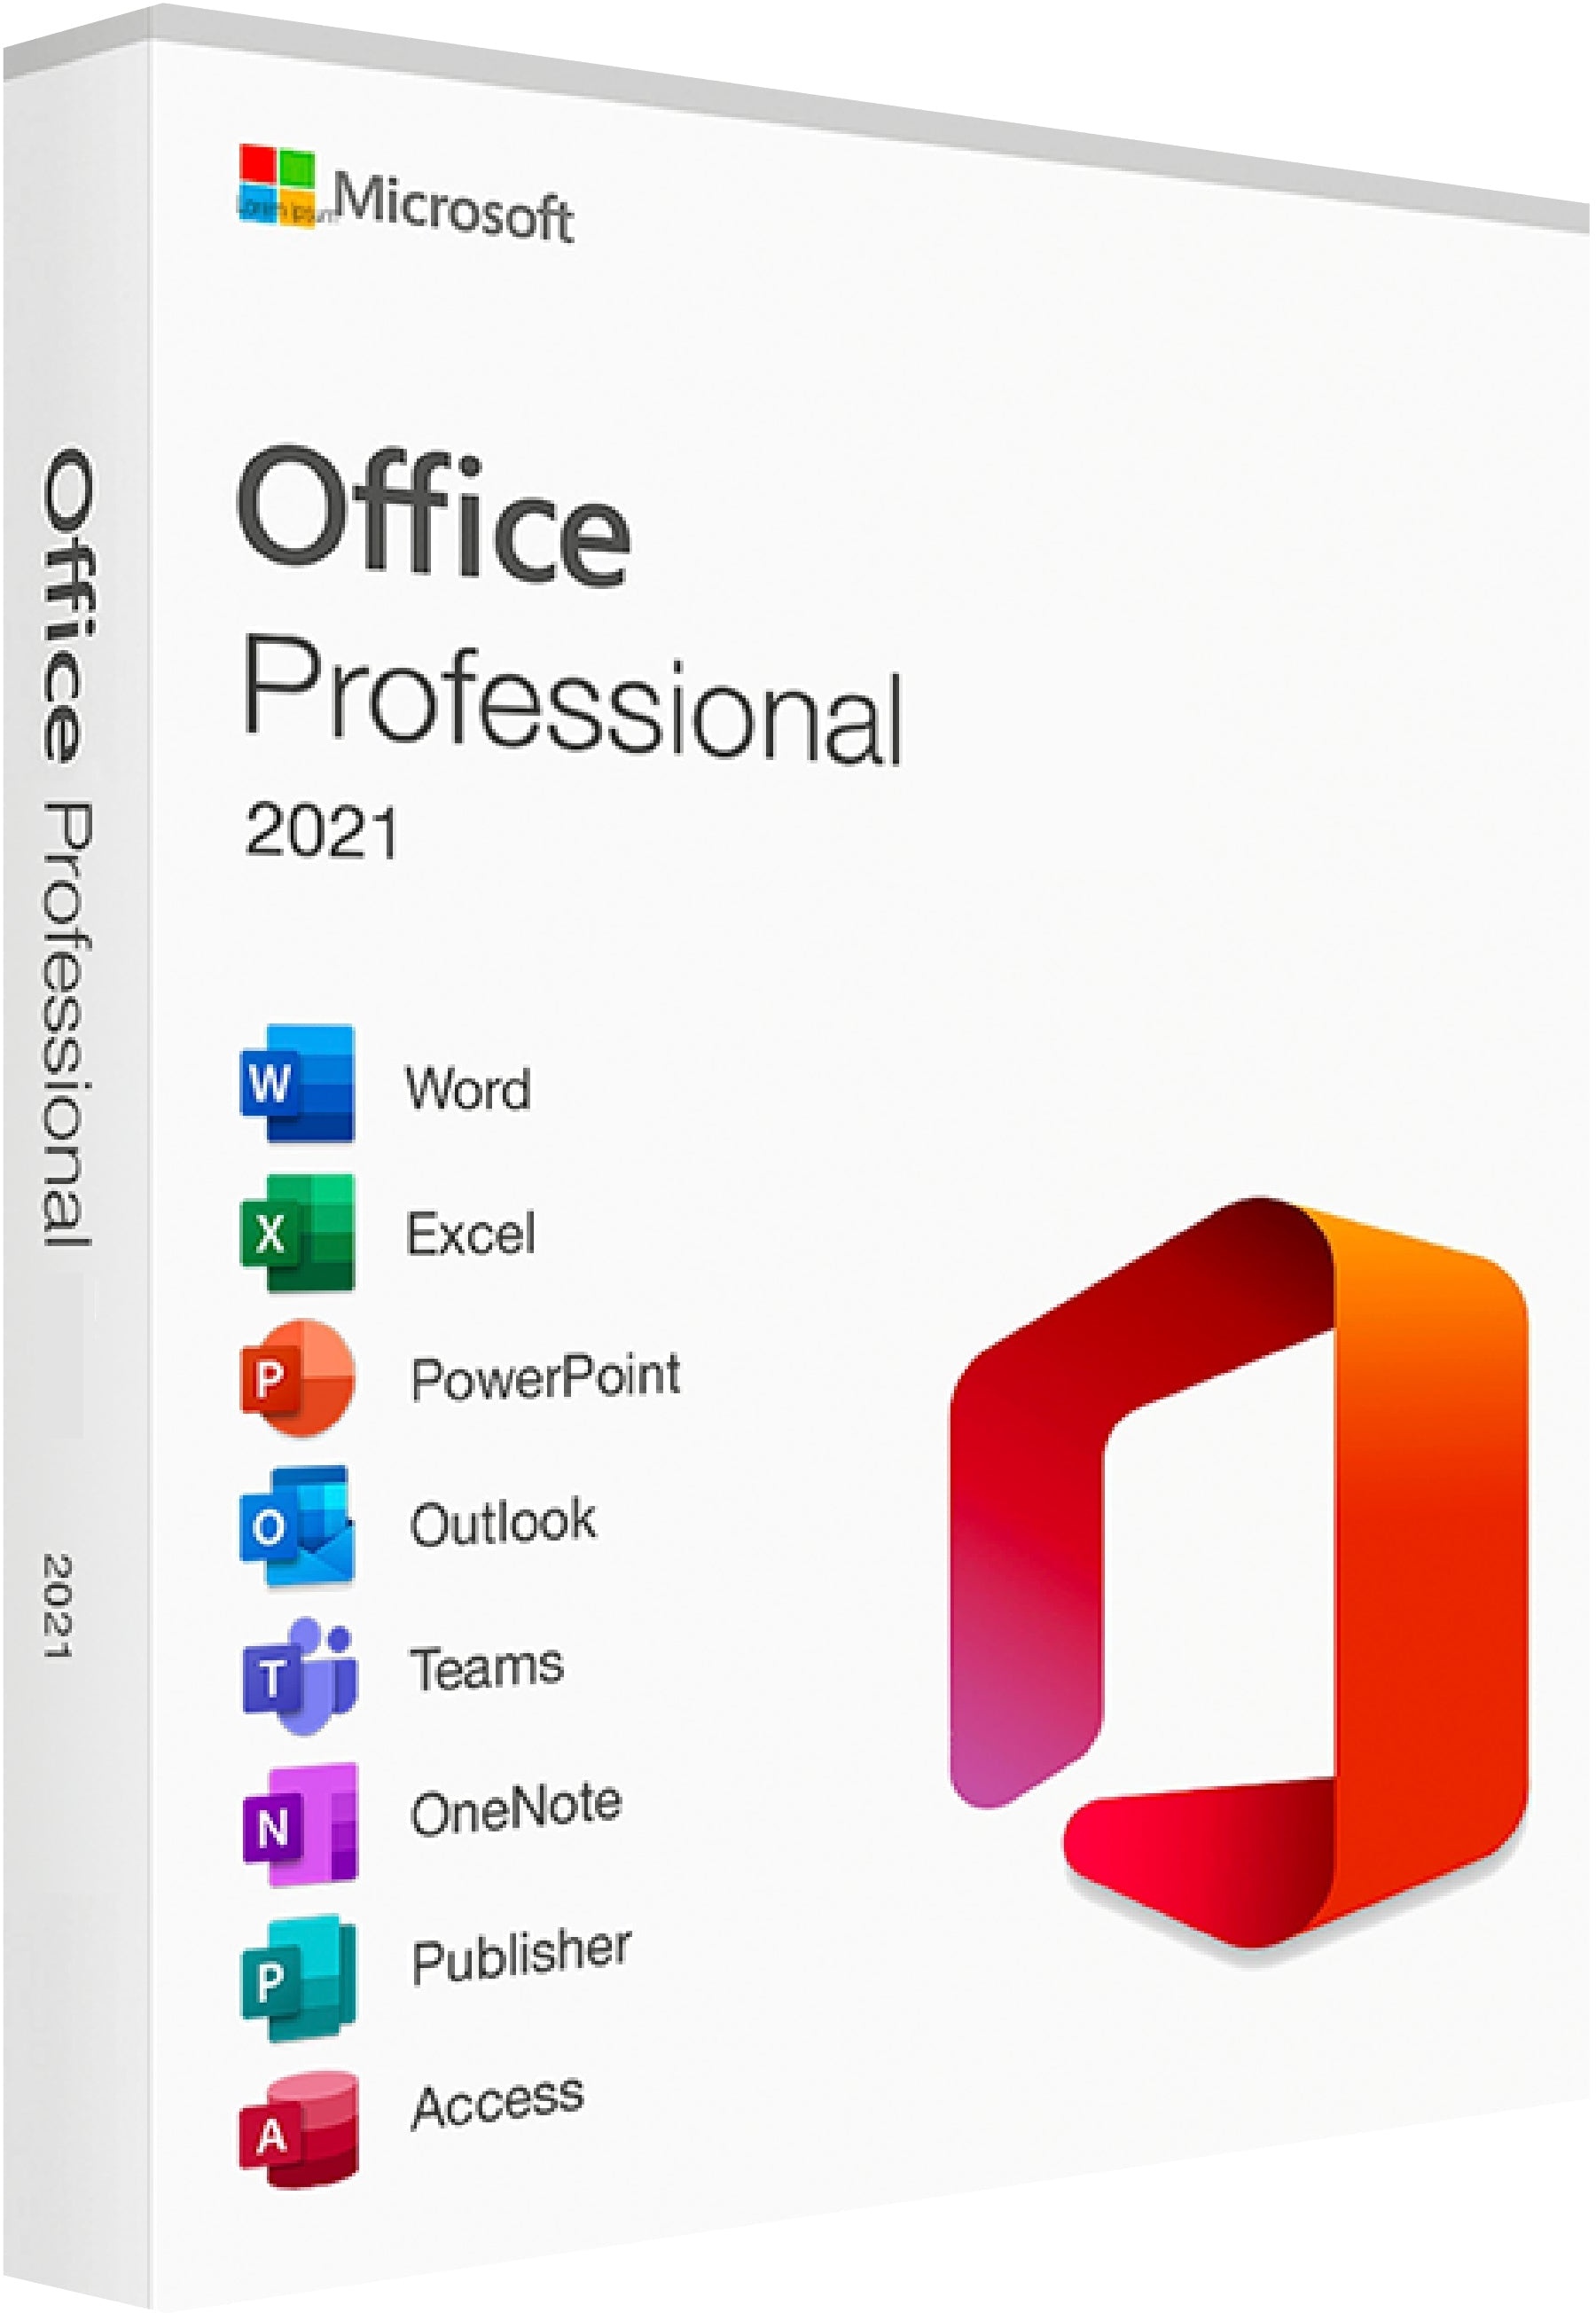 #Microsoft Office 2021 Professional Windows